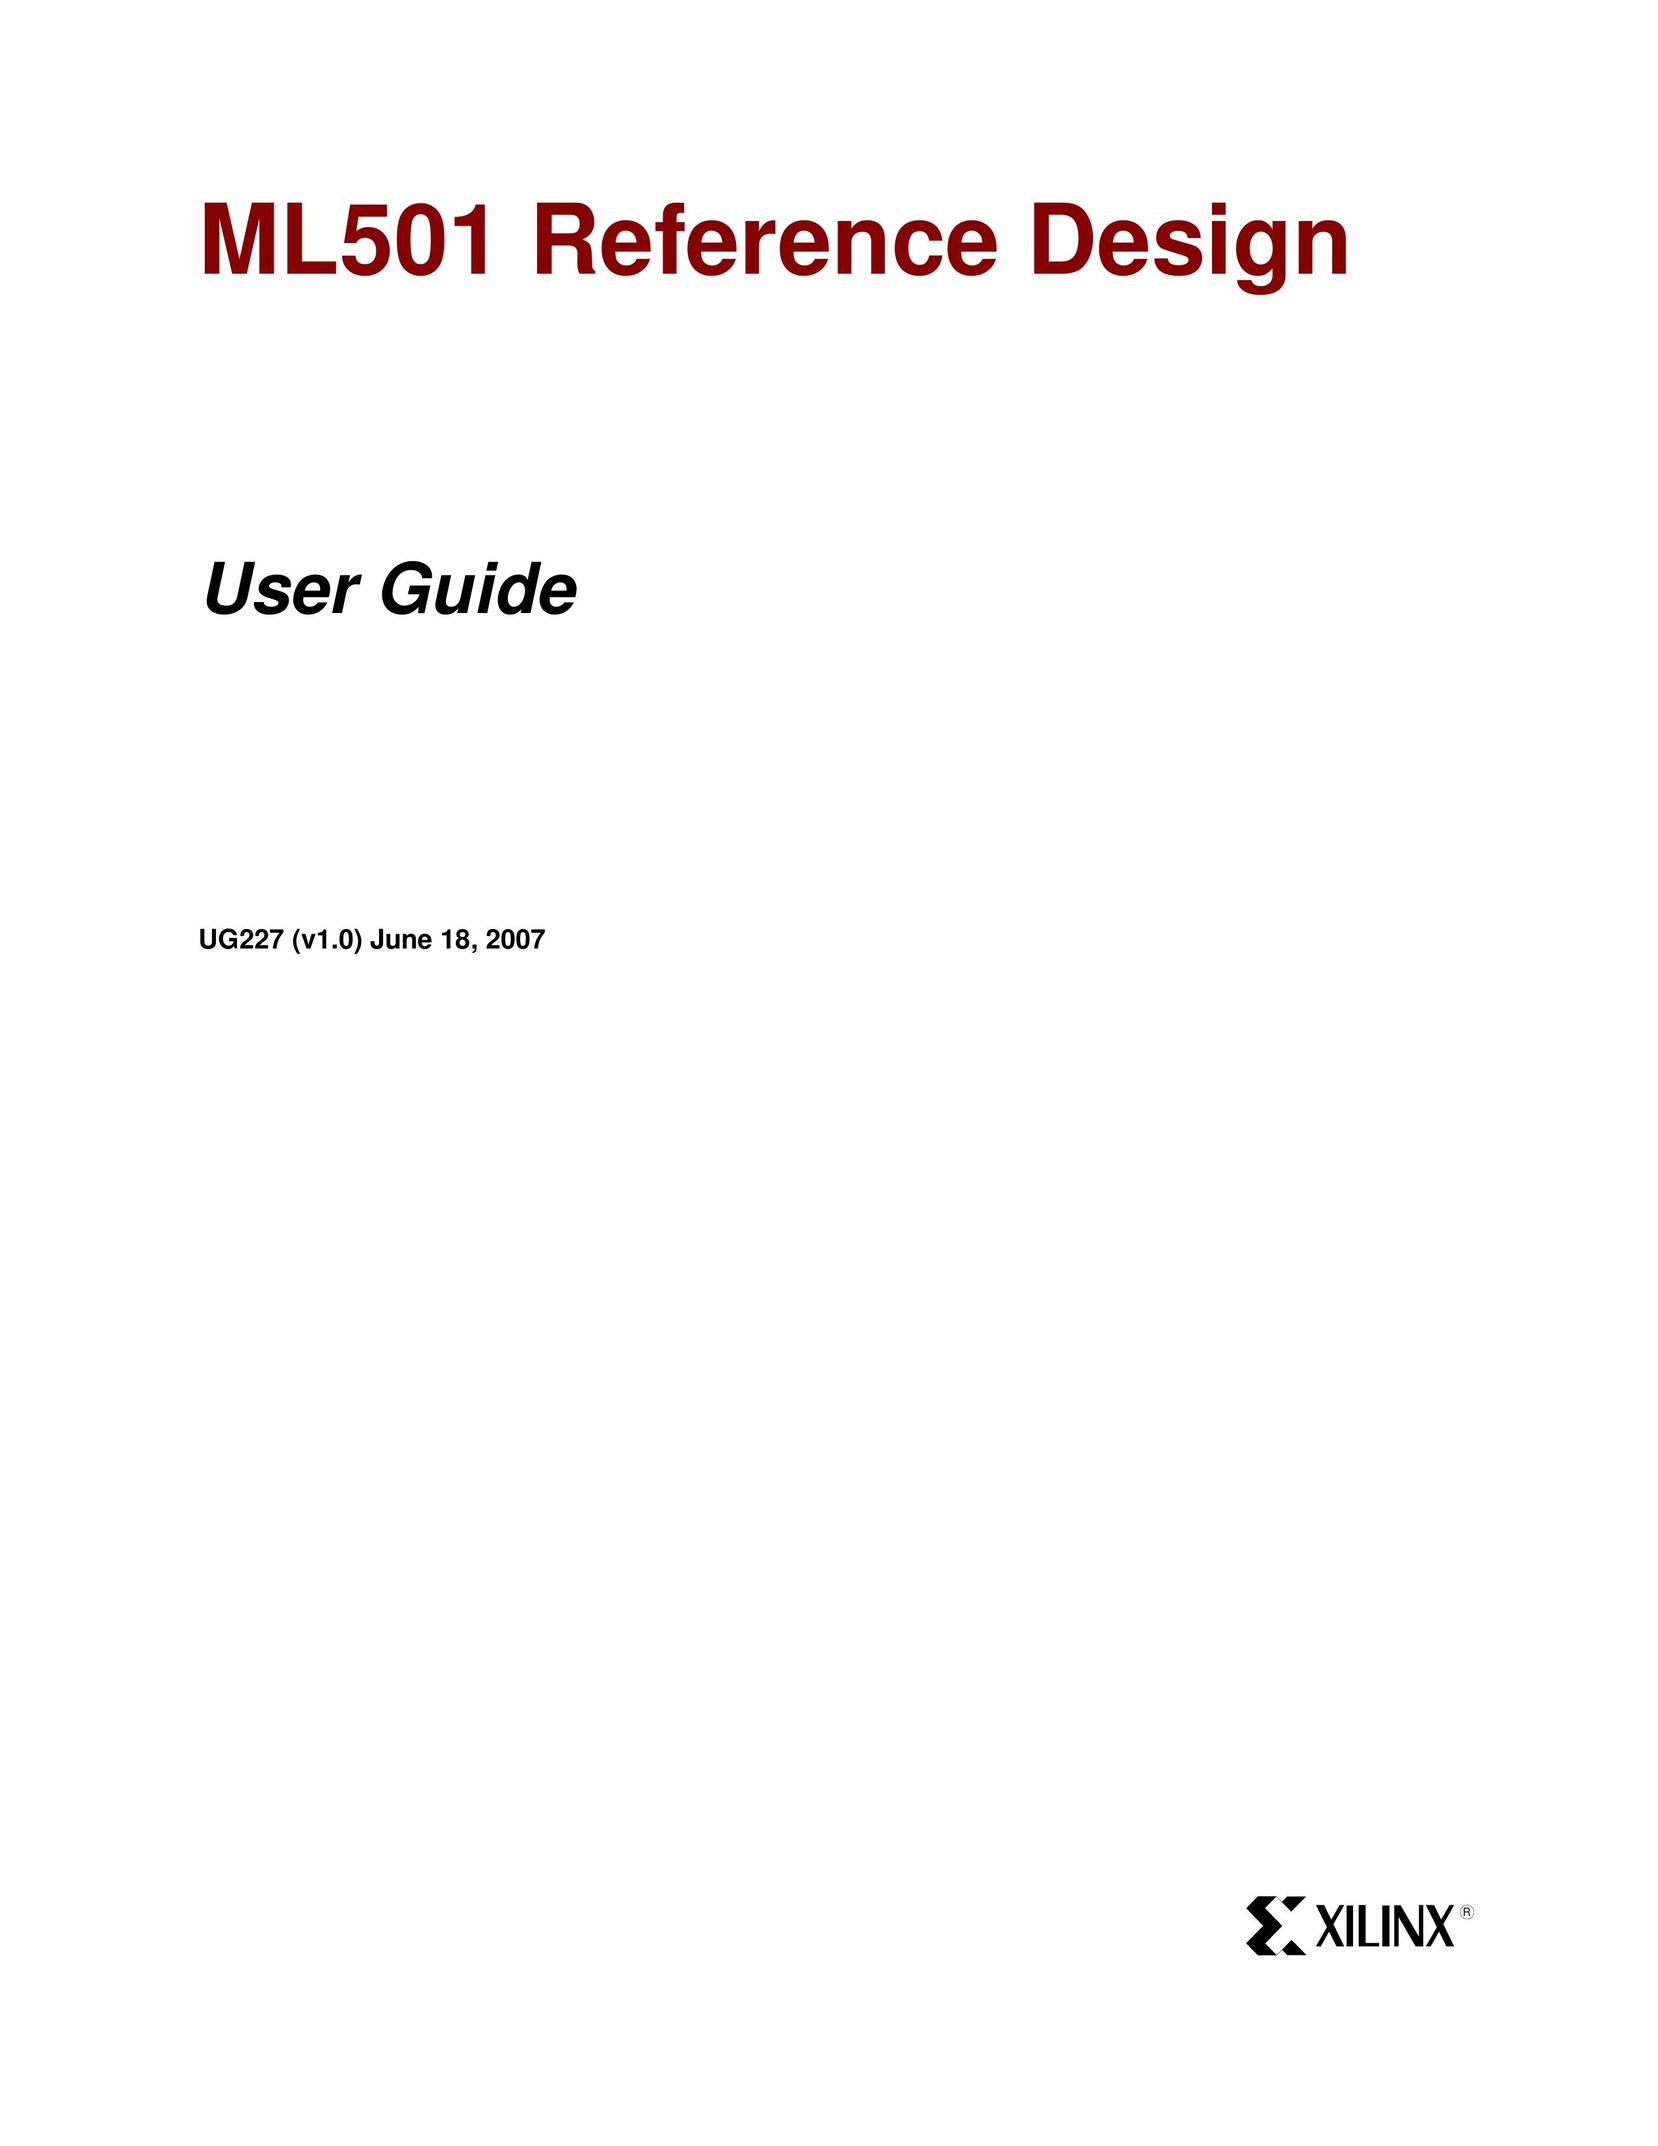 Xilinx ML501 Computer Hardware User Manual